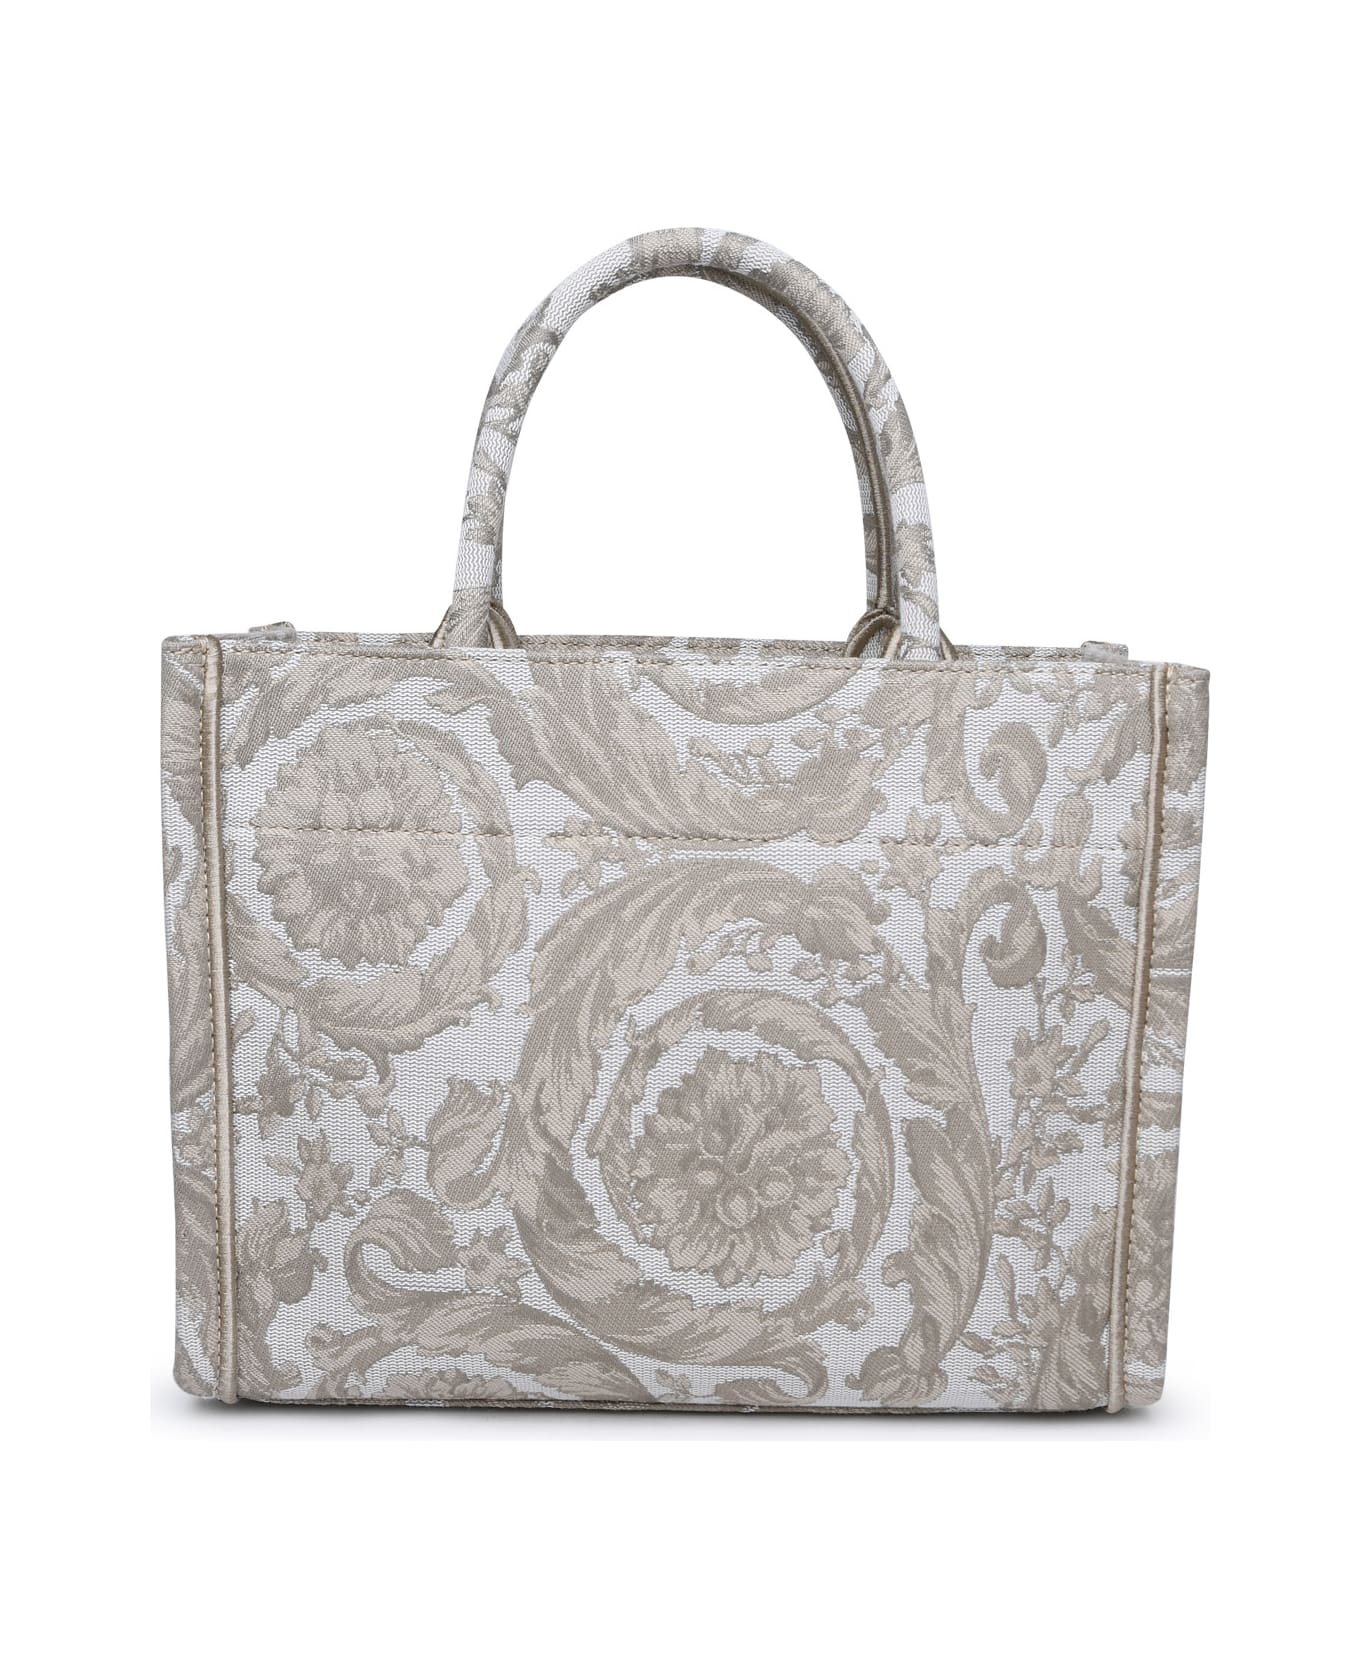 Versace Two-tone Fabric Bag - Beige